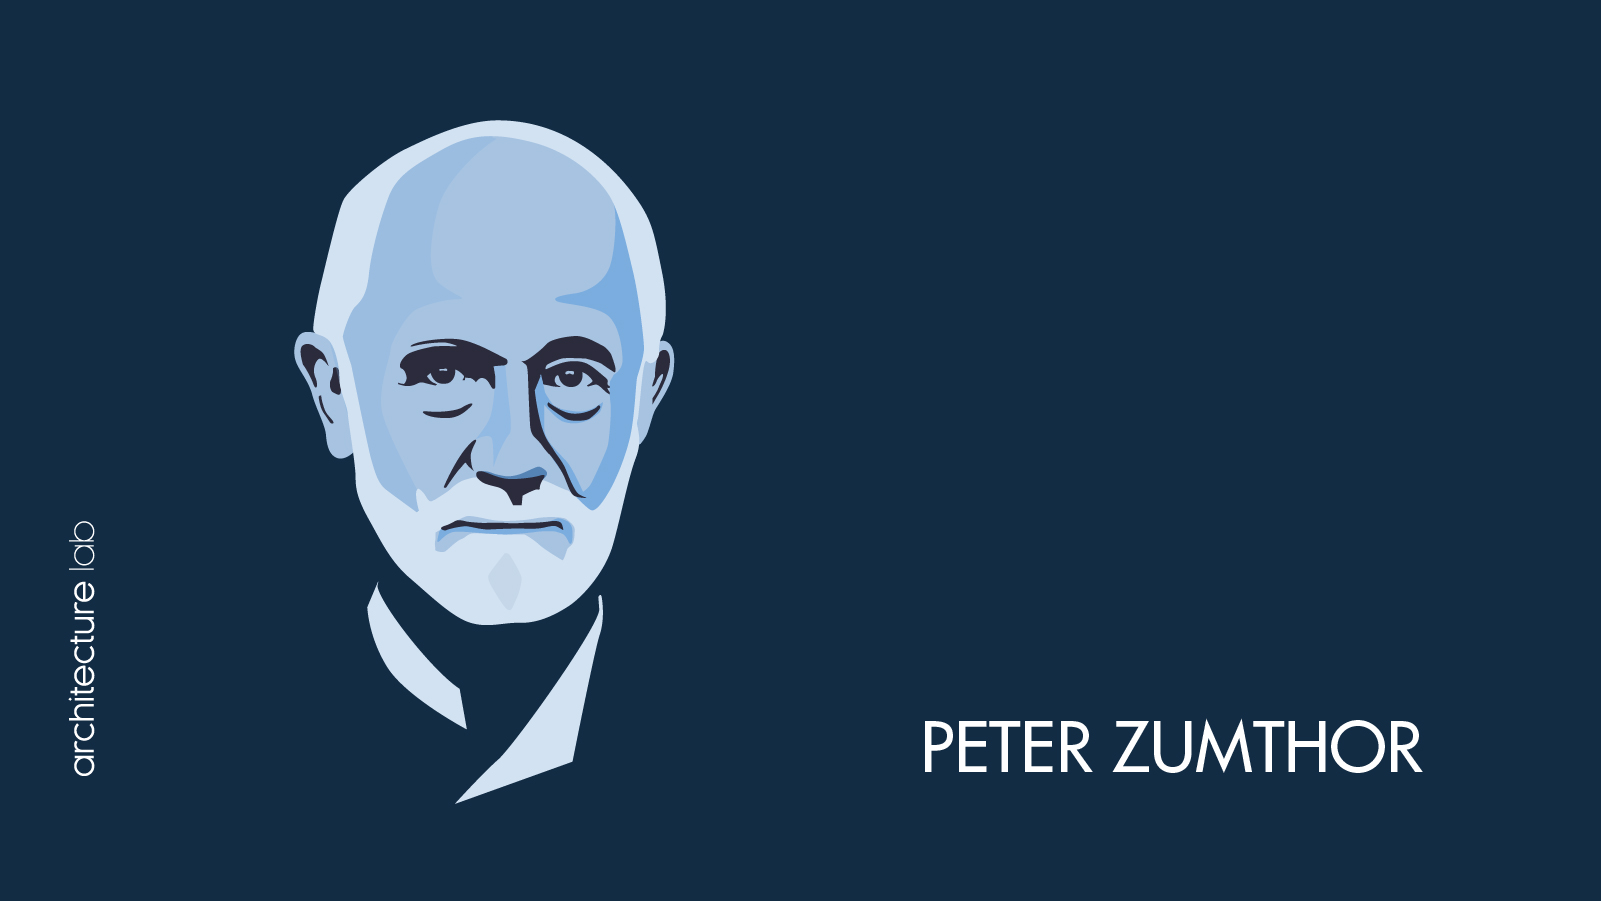 Peter zumthor: biography, works, awards